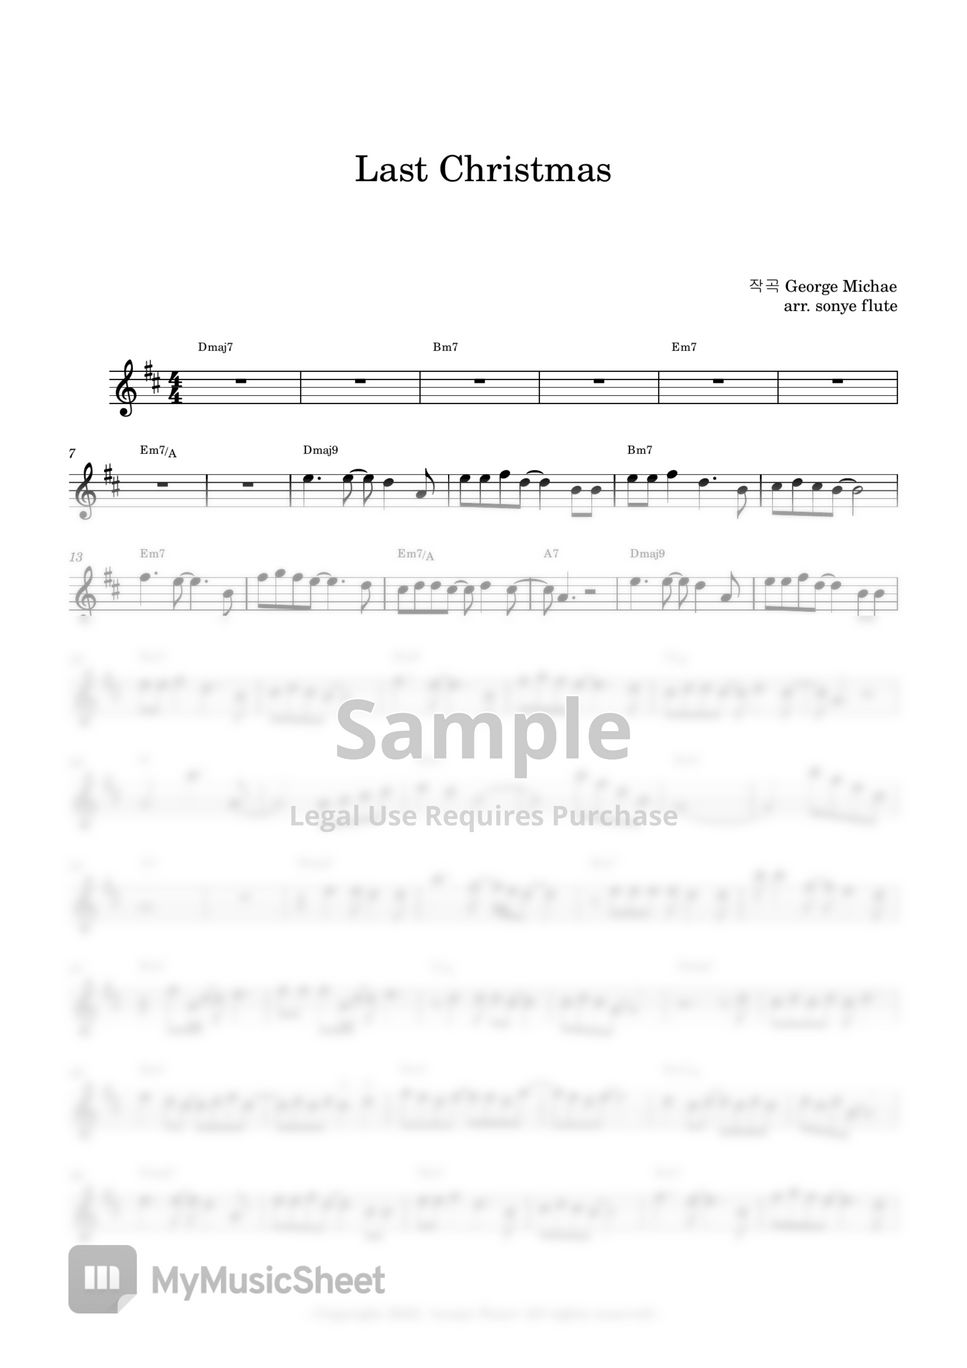 Wham! - Last Christmas (Flute Sheet Music) by sonye flute